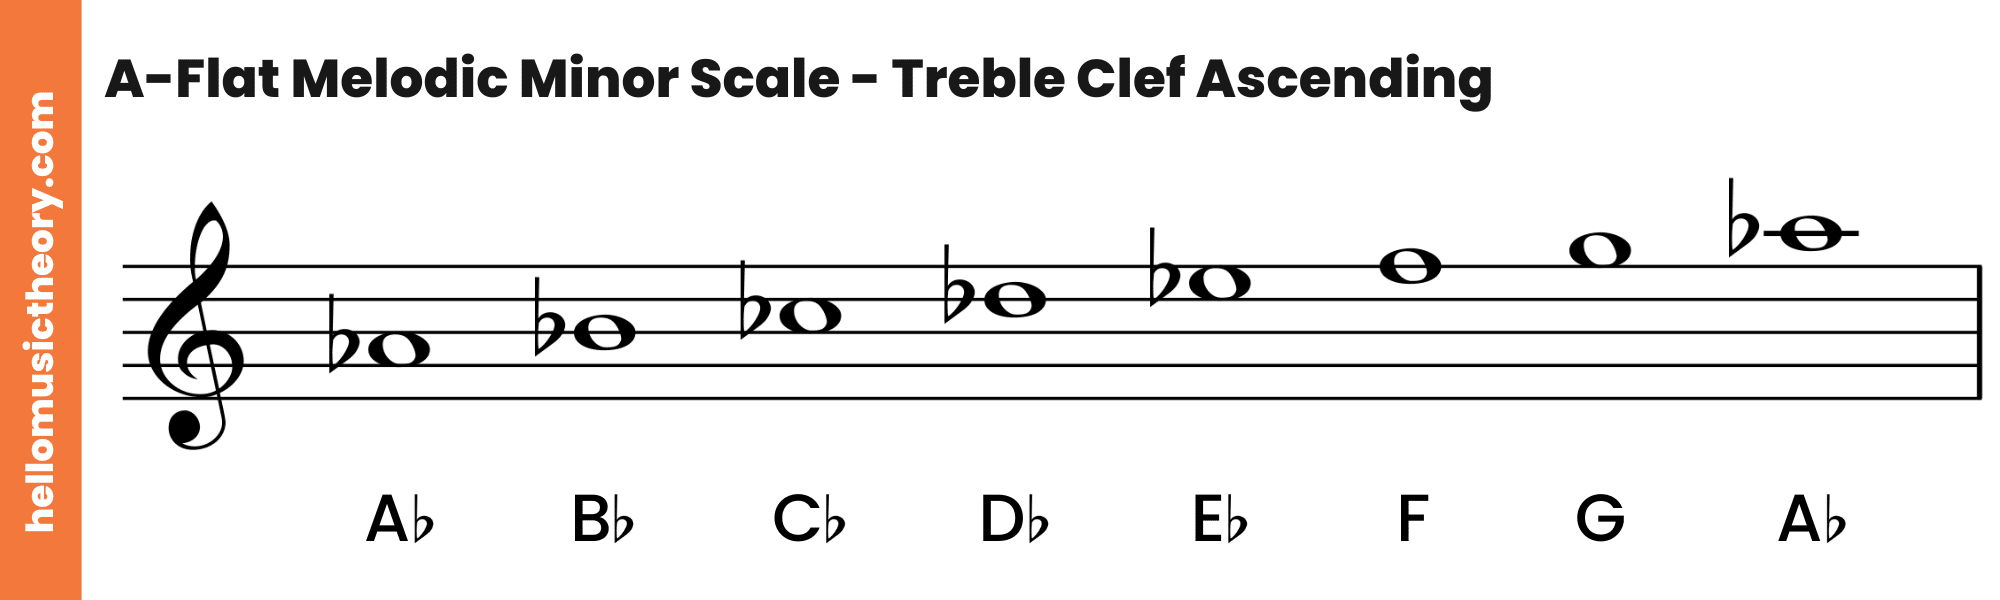 A-Flat Melodic Minor Scale Treble Clef Ascending